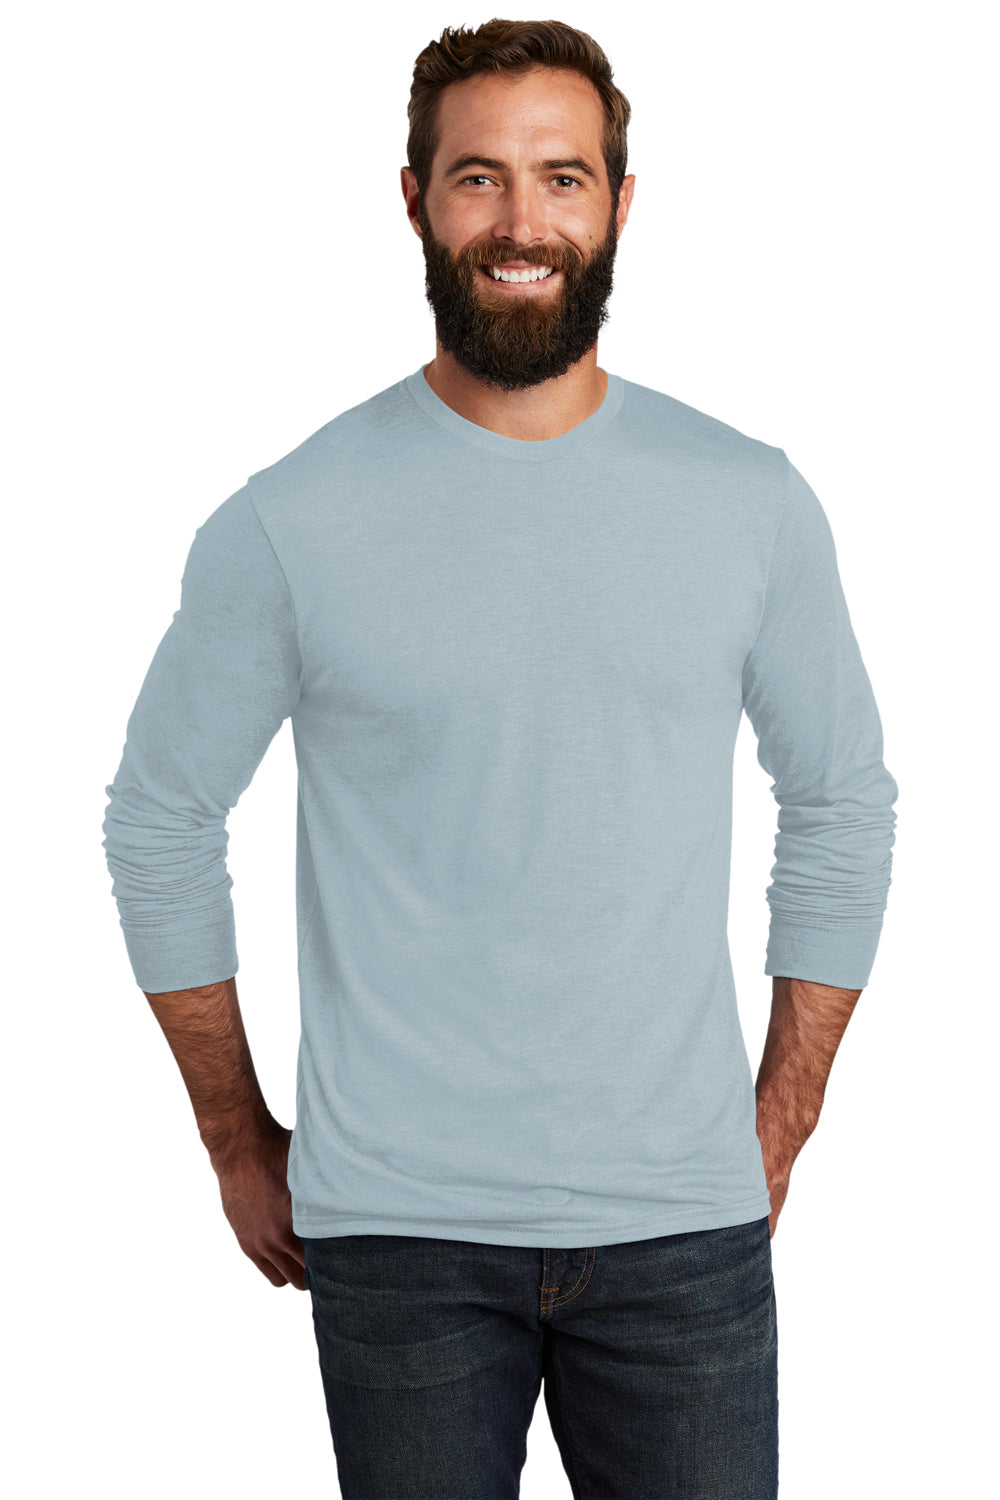 Allmade AL6004 Mens Long Sleeve Crewneck T-Shirt I Like You Blue Model Front